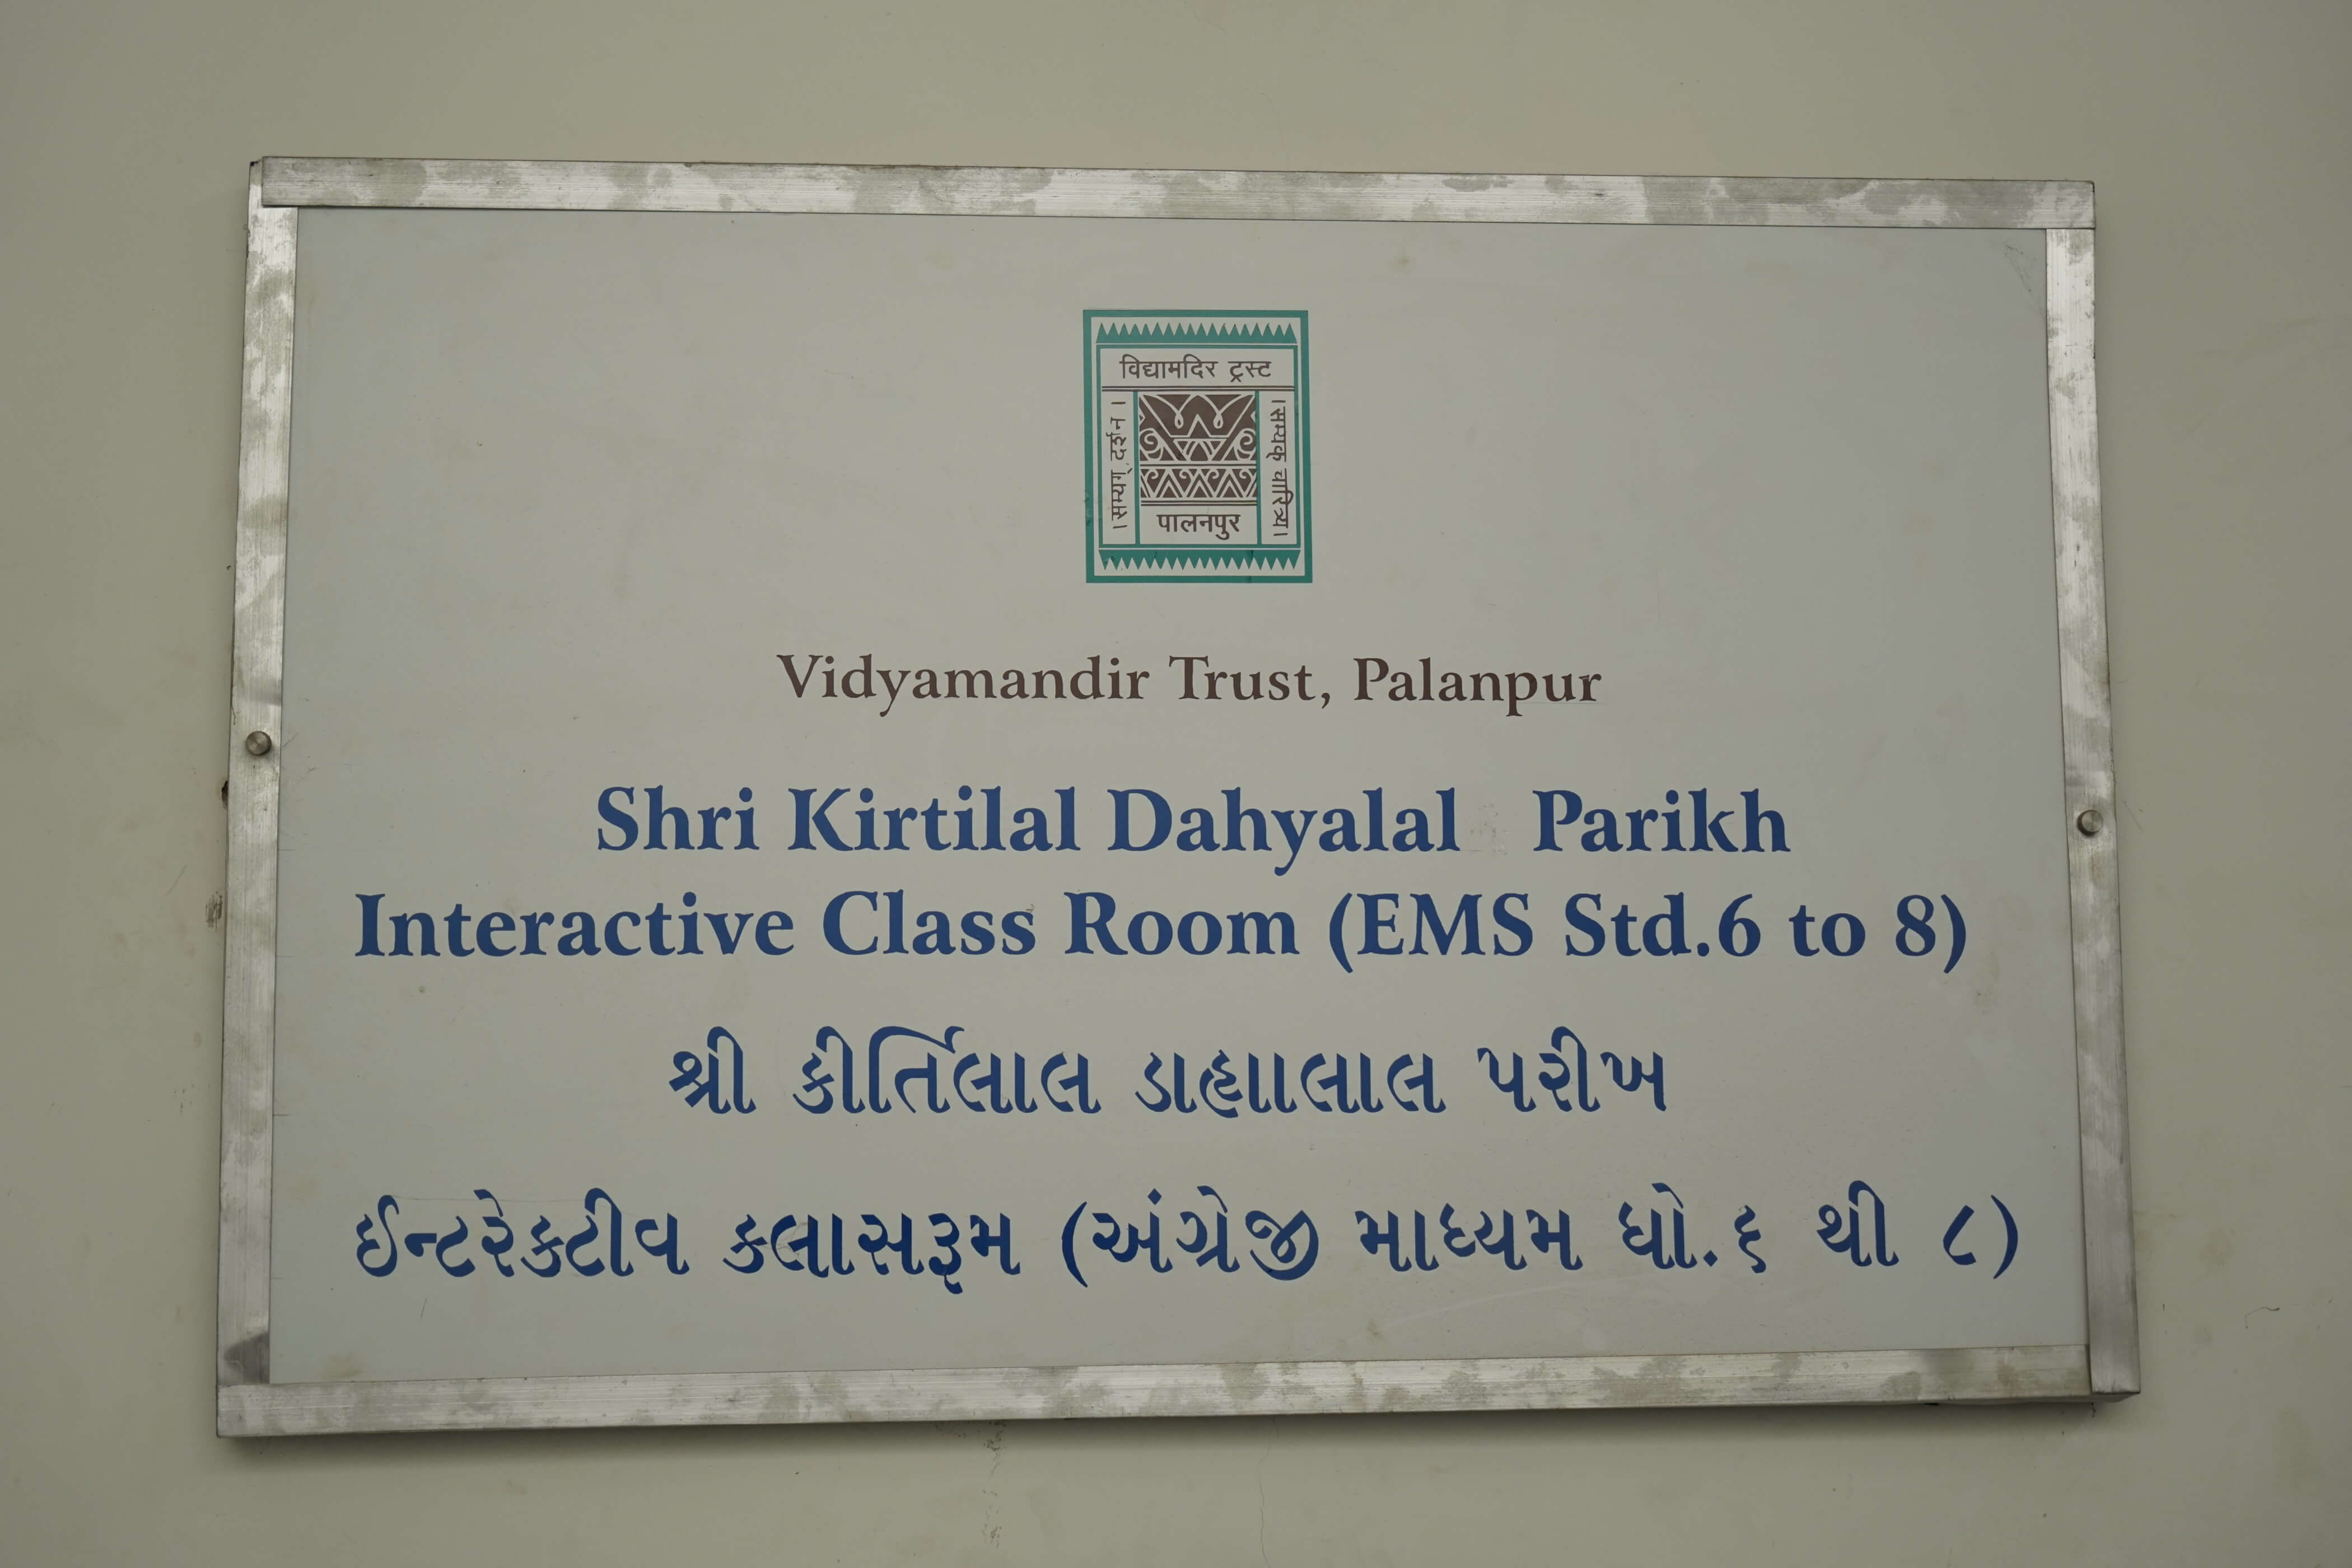 Shri Kirtilal Dahyalal Parikh Interactive Class Room (EMS 6 to 8) - Building Photo